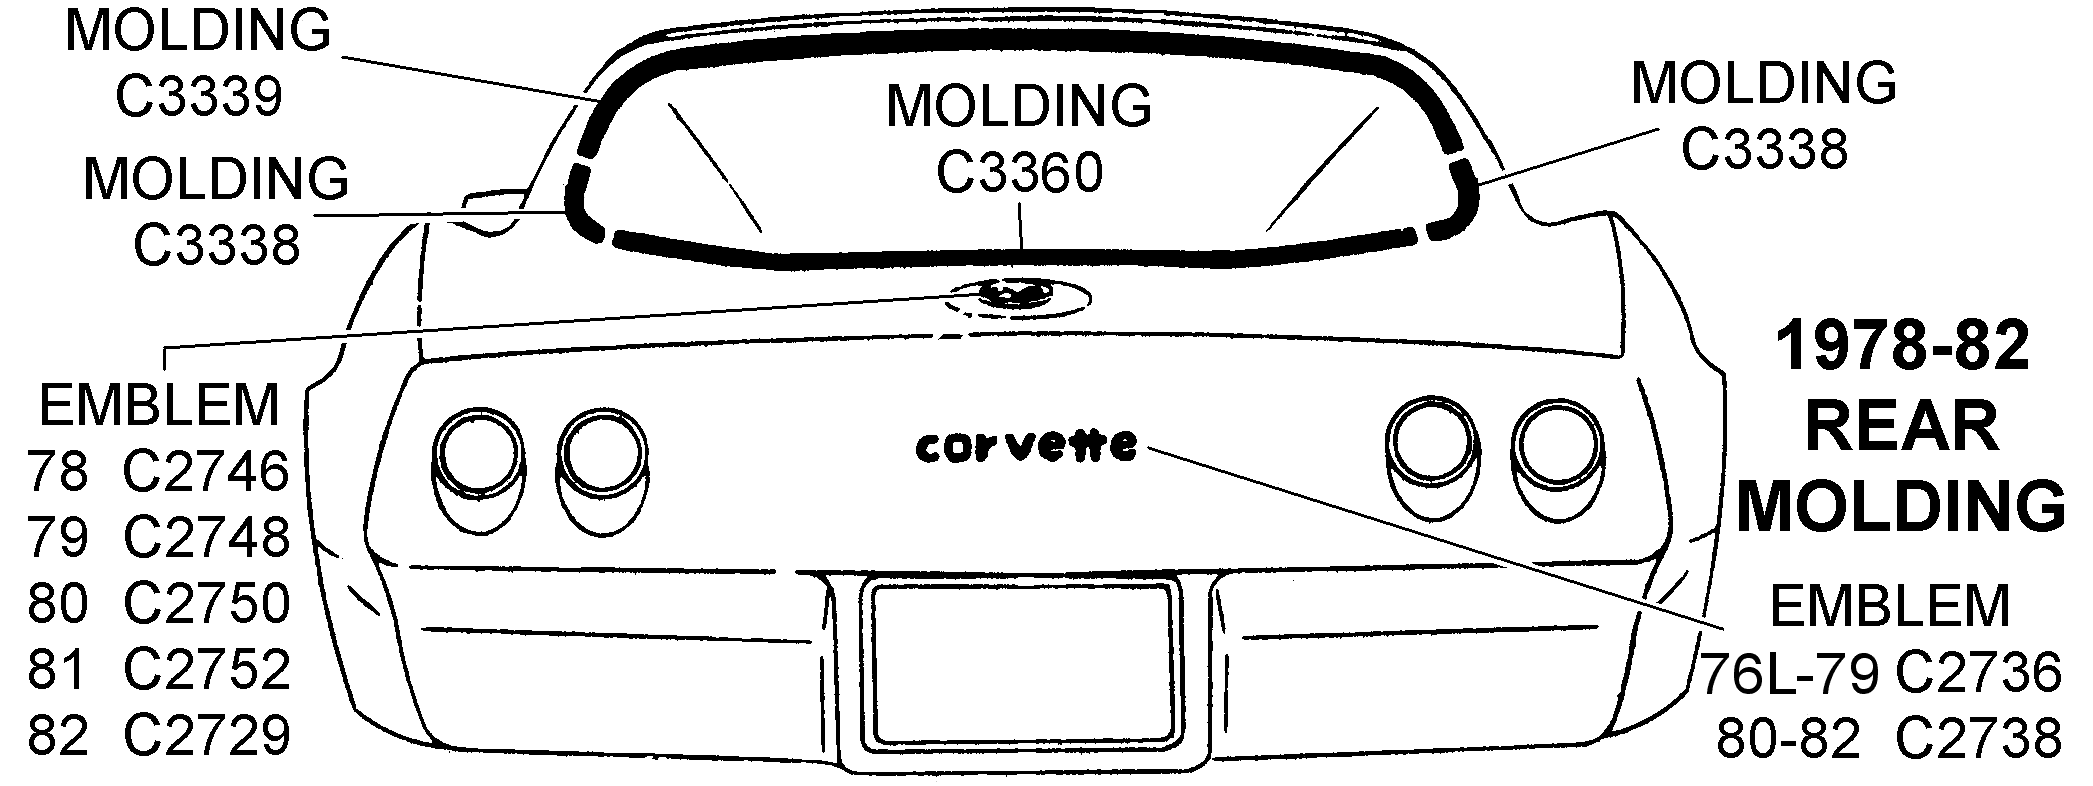 1978-82 REAR MOLDING - DIAGRAM Diagram Thumbnail